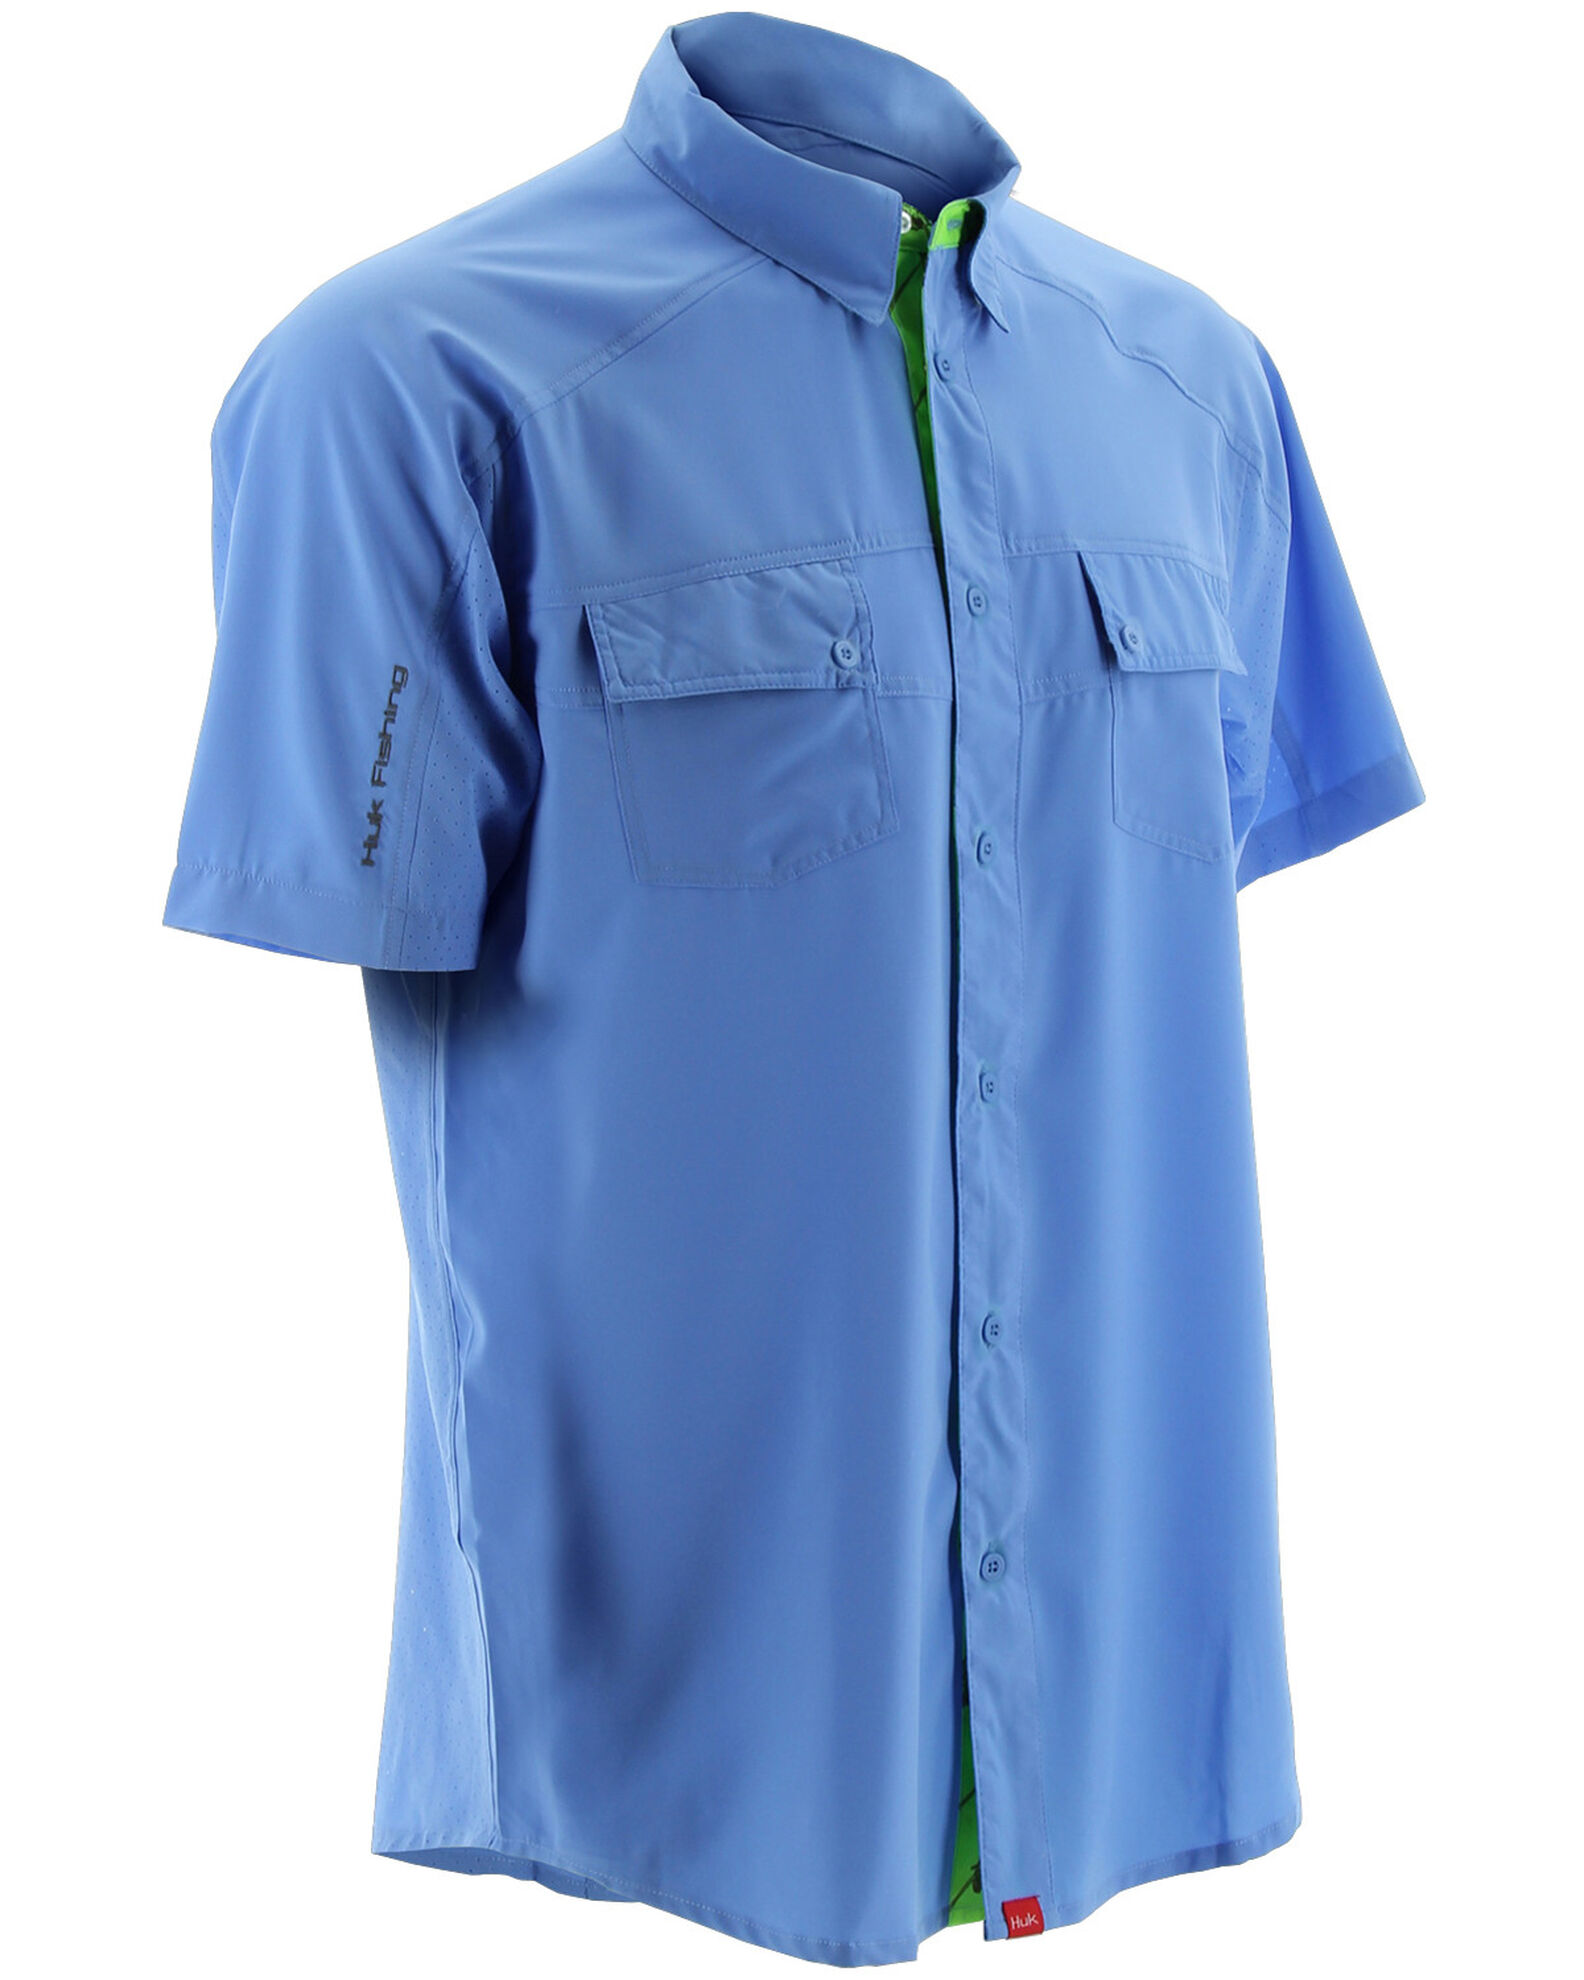 Product Name: Huk Performance Fishing Men's Next Level Woven Short Sleeve  Shirt